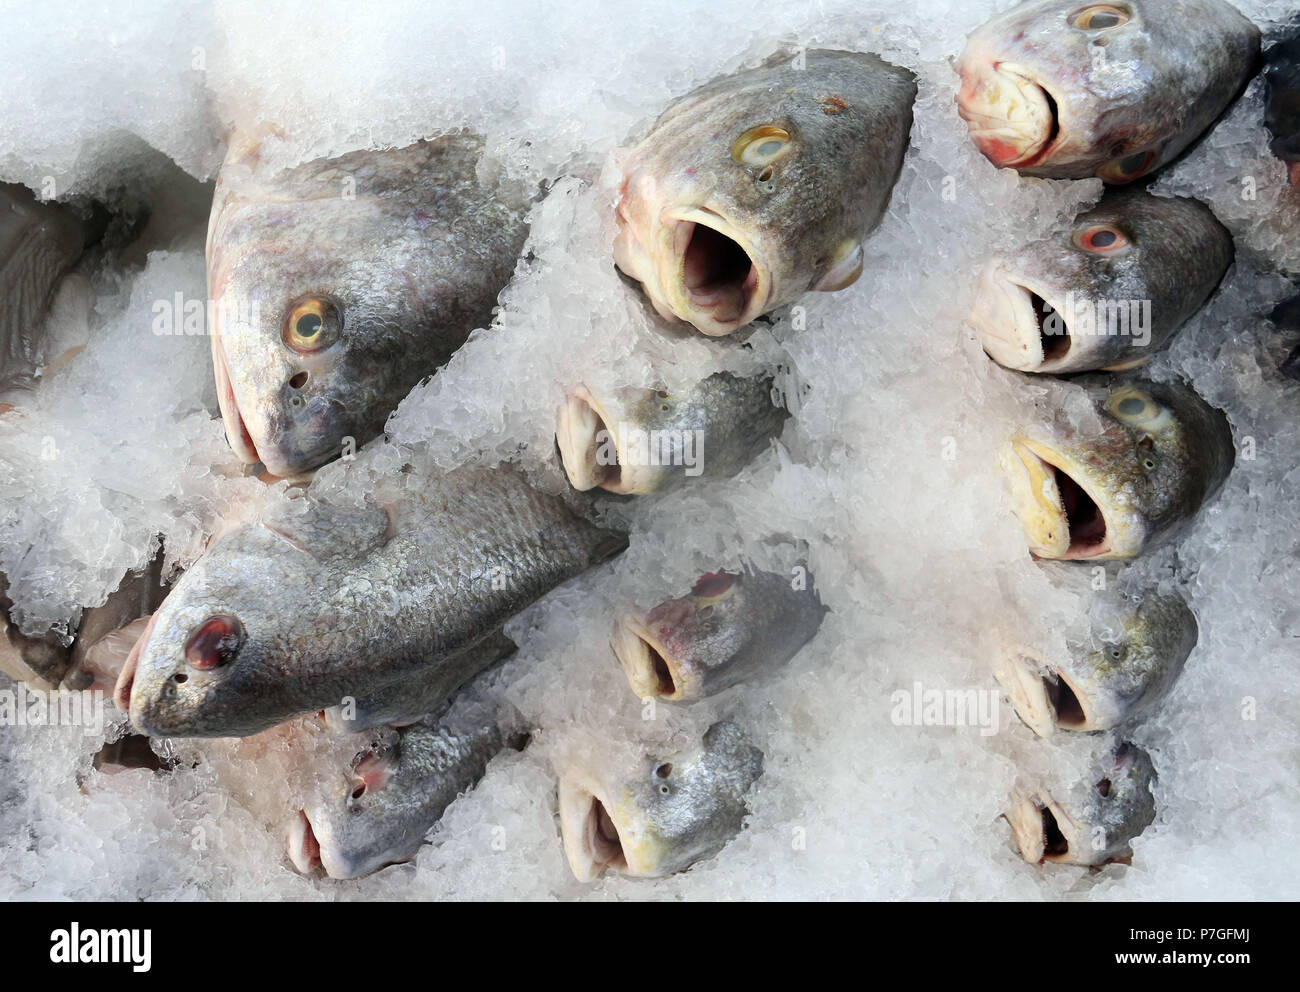 Perch fish on ice at fish market Stock Photo